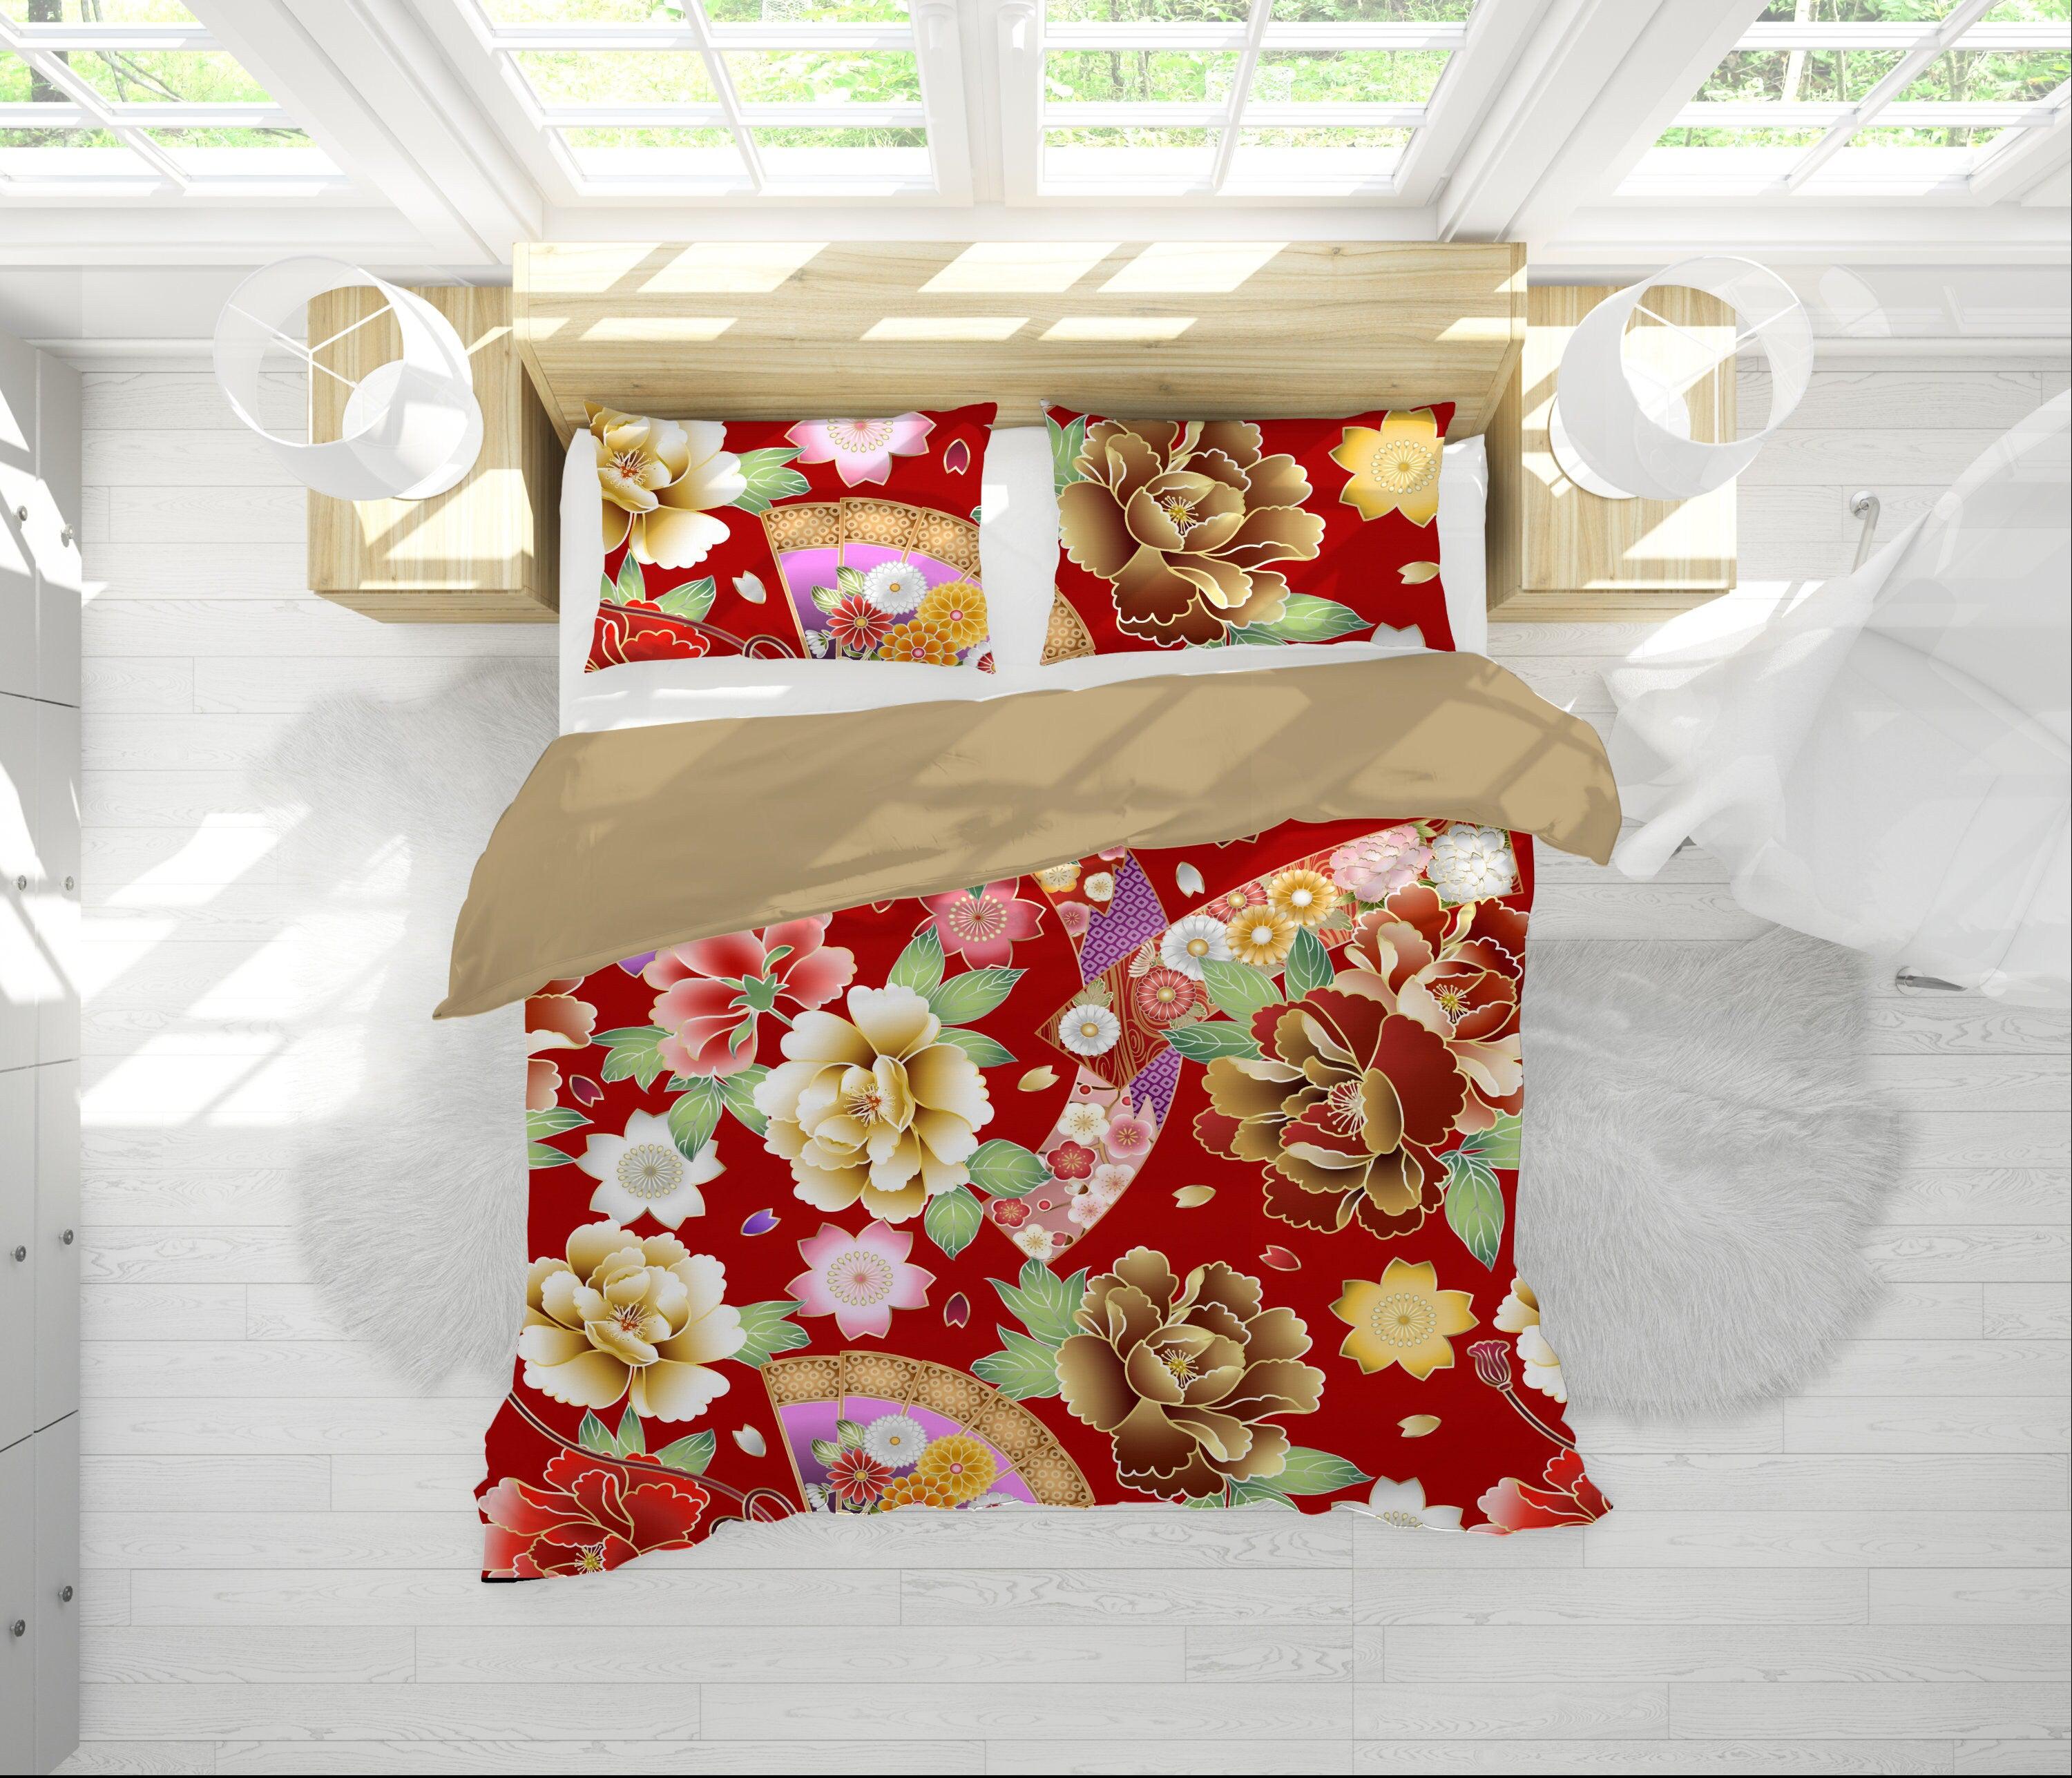 daintyduvet Red Duvet Cover Full Set | Comforter Cover Set with Japanese Kimono Floral Prints